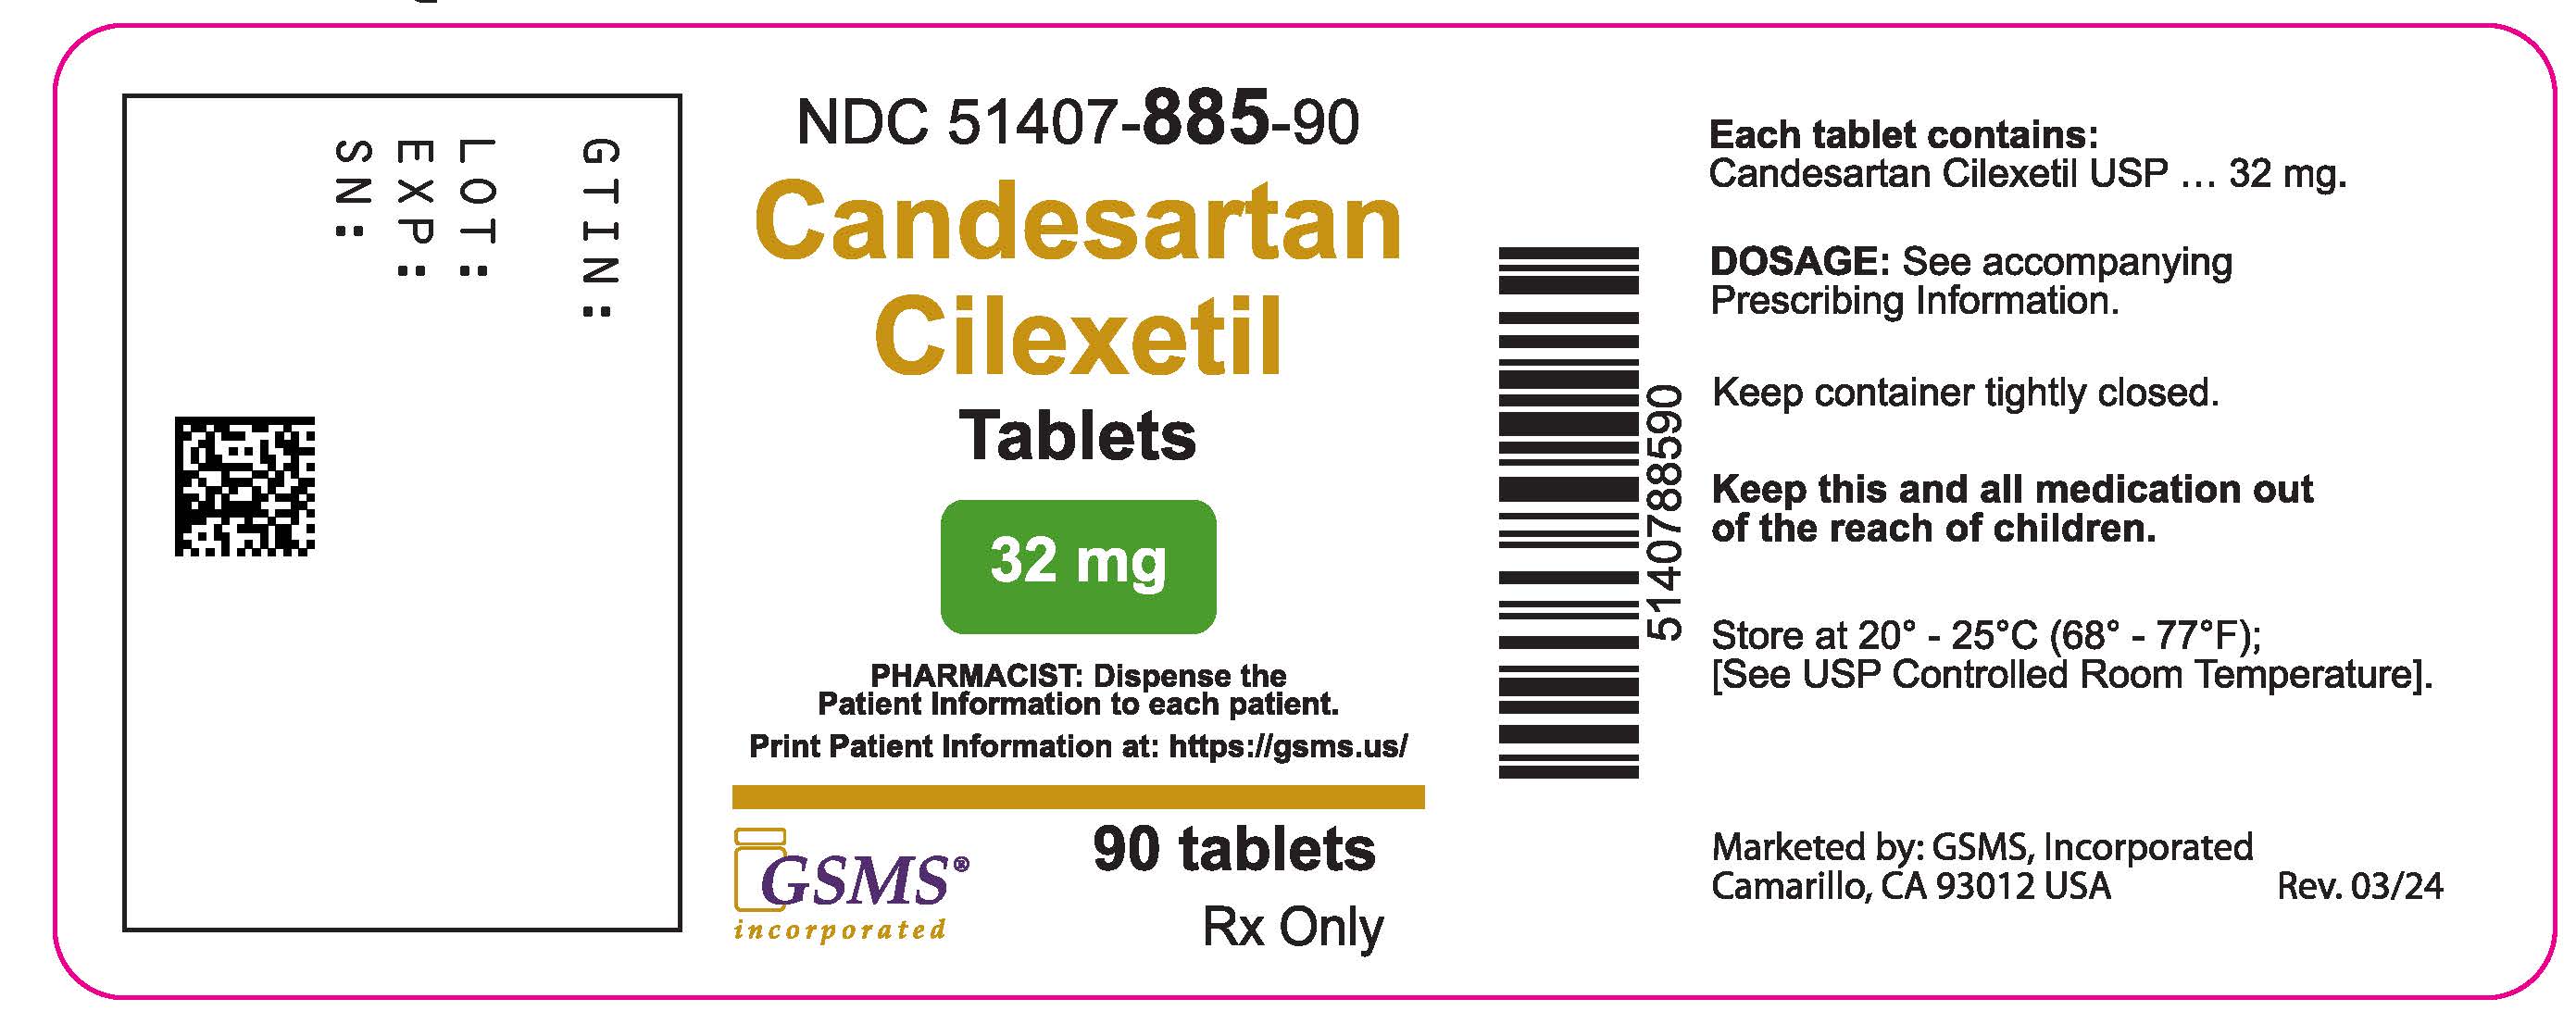 51407-885-90 - Candesartan Cilexetil 32 mg - Rev. 0324.jpg